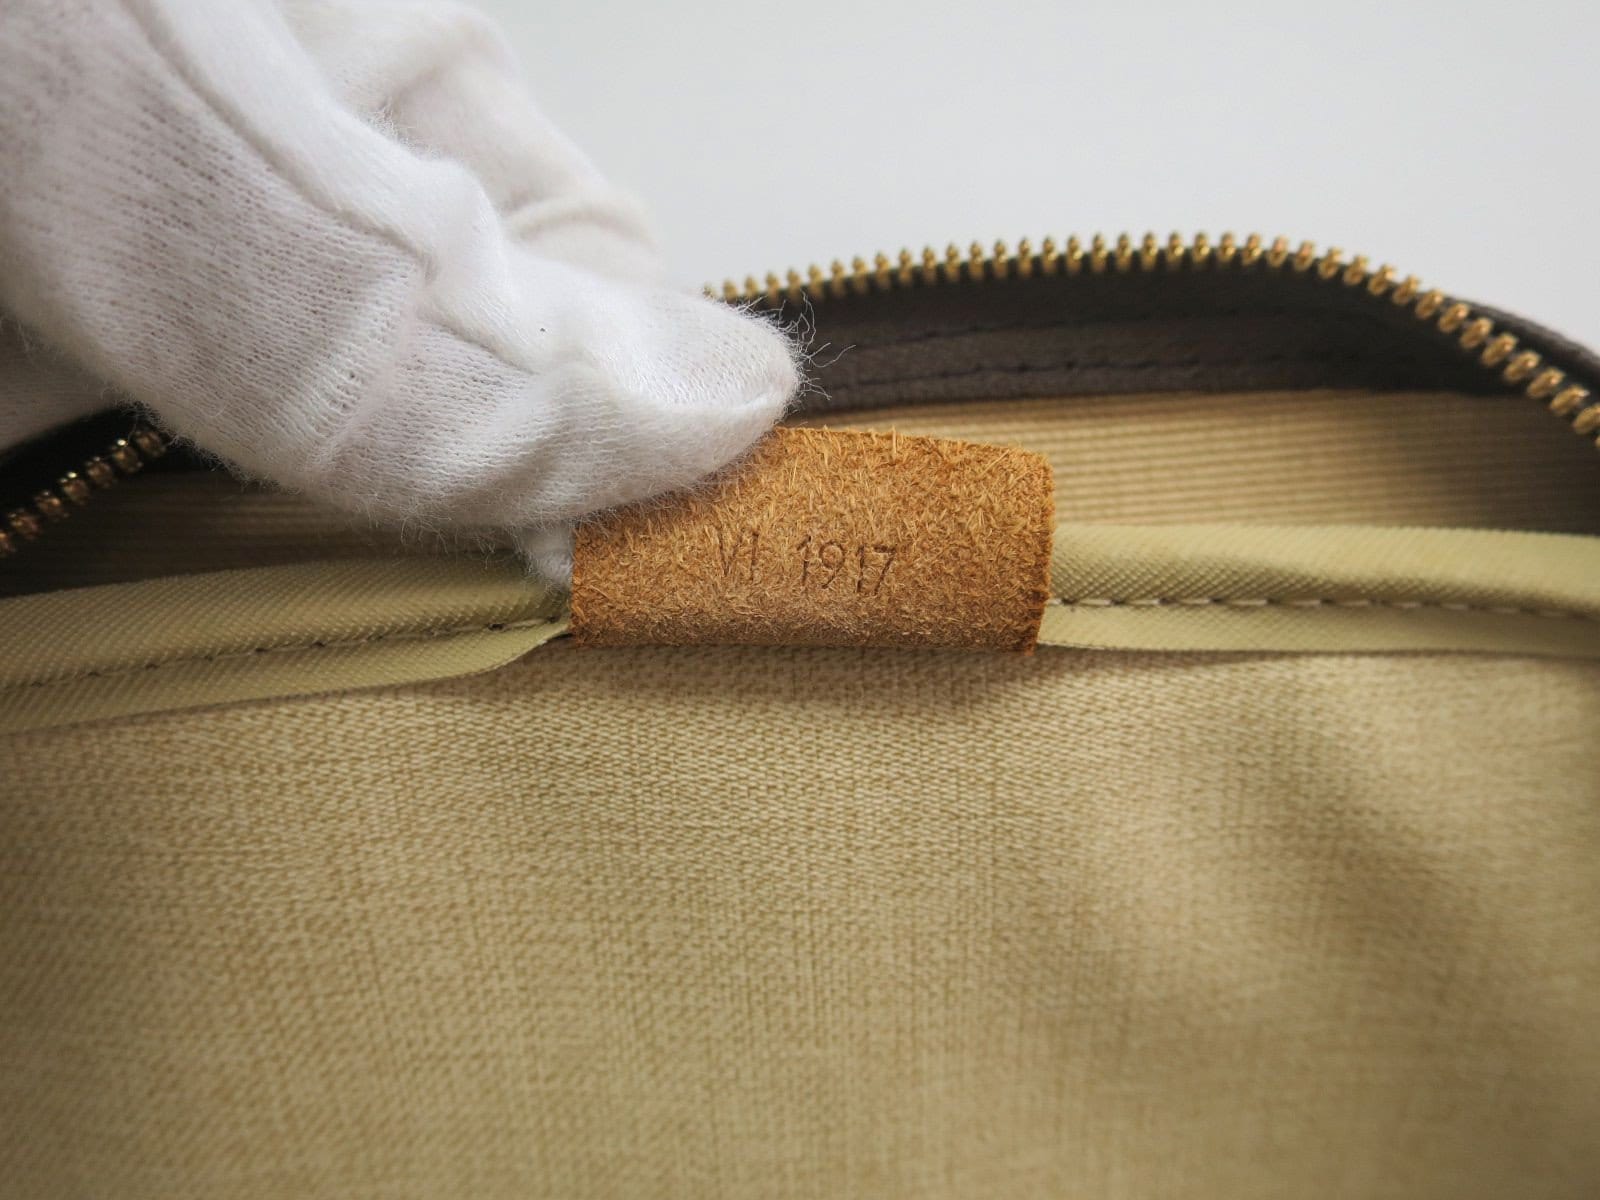 Louis Vuitton, Bags, New Vachetta Louis Vuitton Monogram Deauville  Bowling Vanity Hand Bag